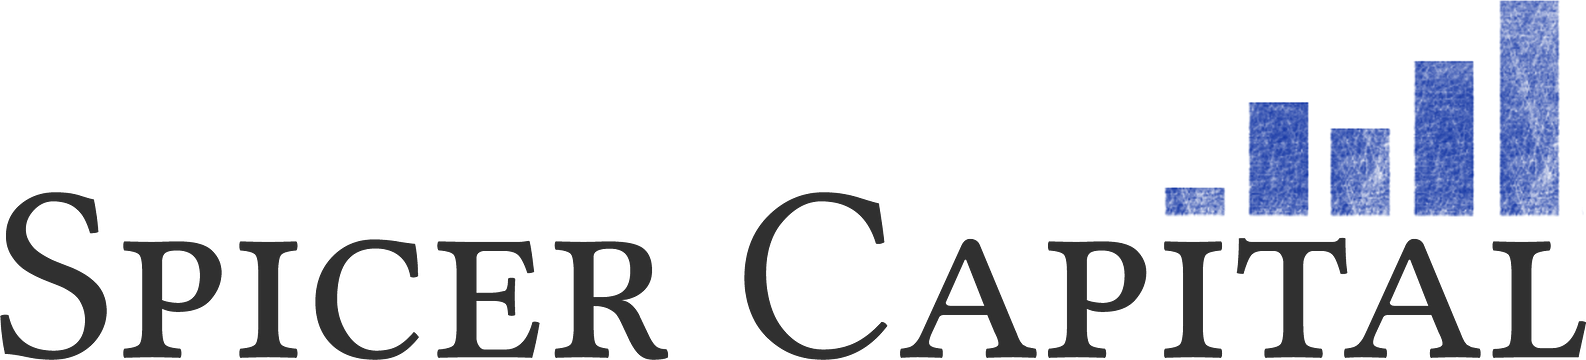 Spicer Capital logo